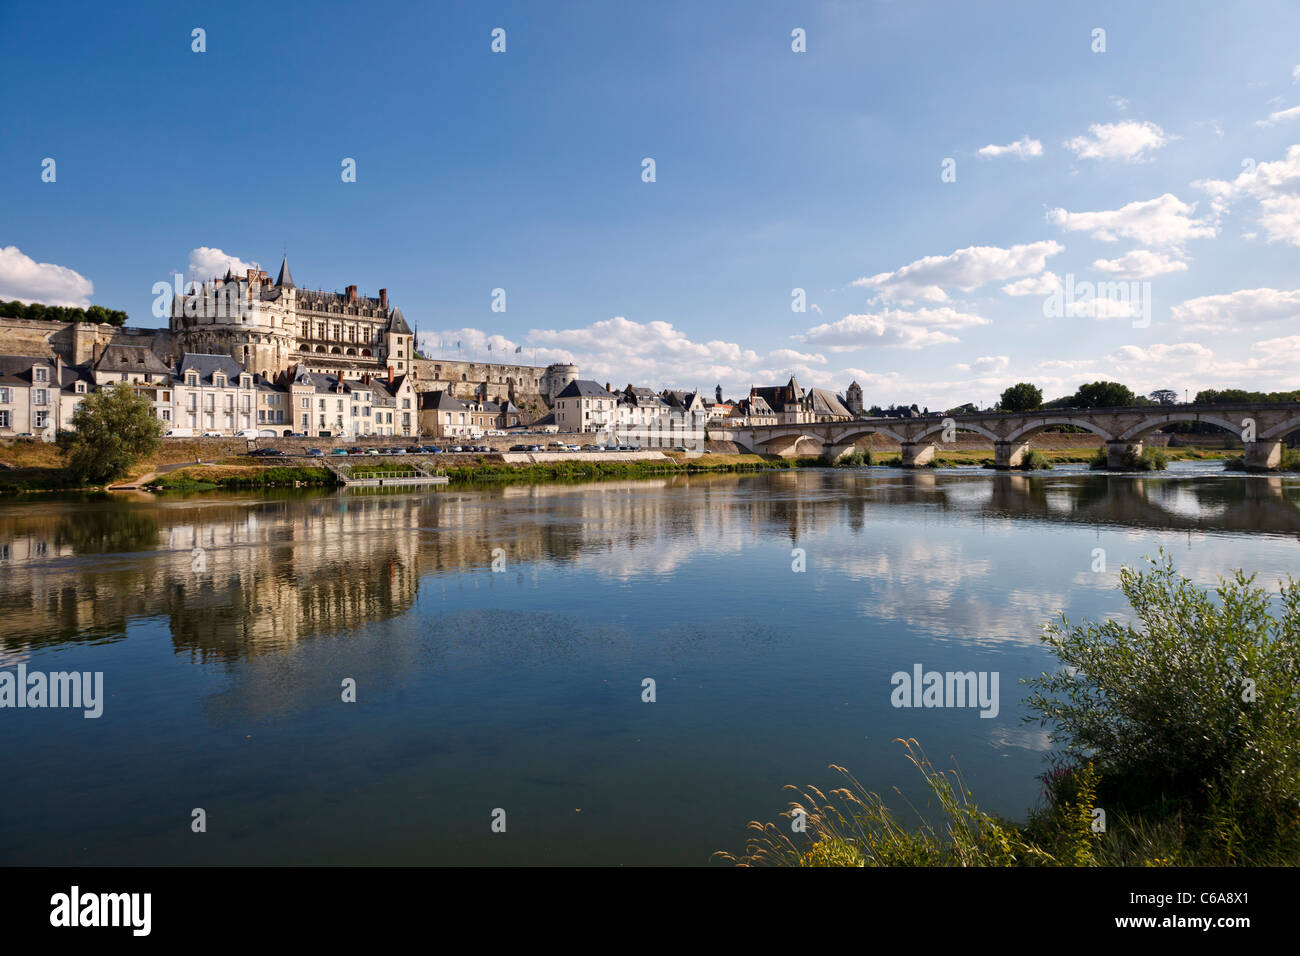 Amboise chateau on the Loire River, Loire Valley, Indre et Loire, France, Europe Stock Photo